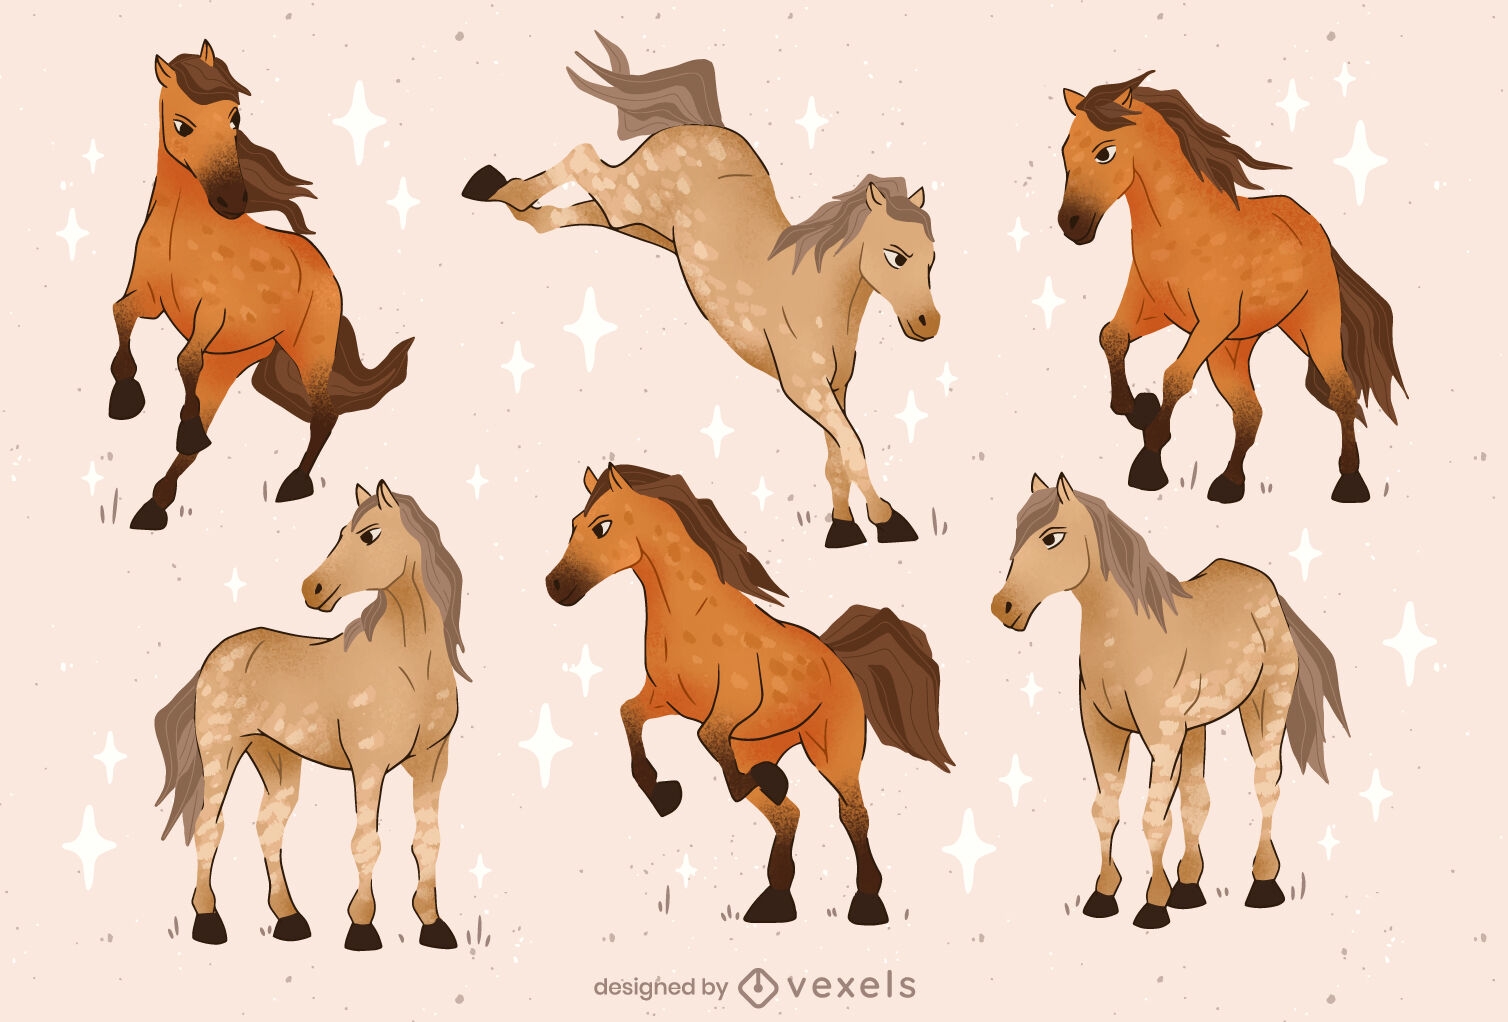 Horse characters set design